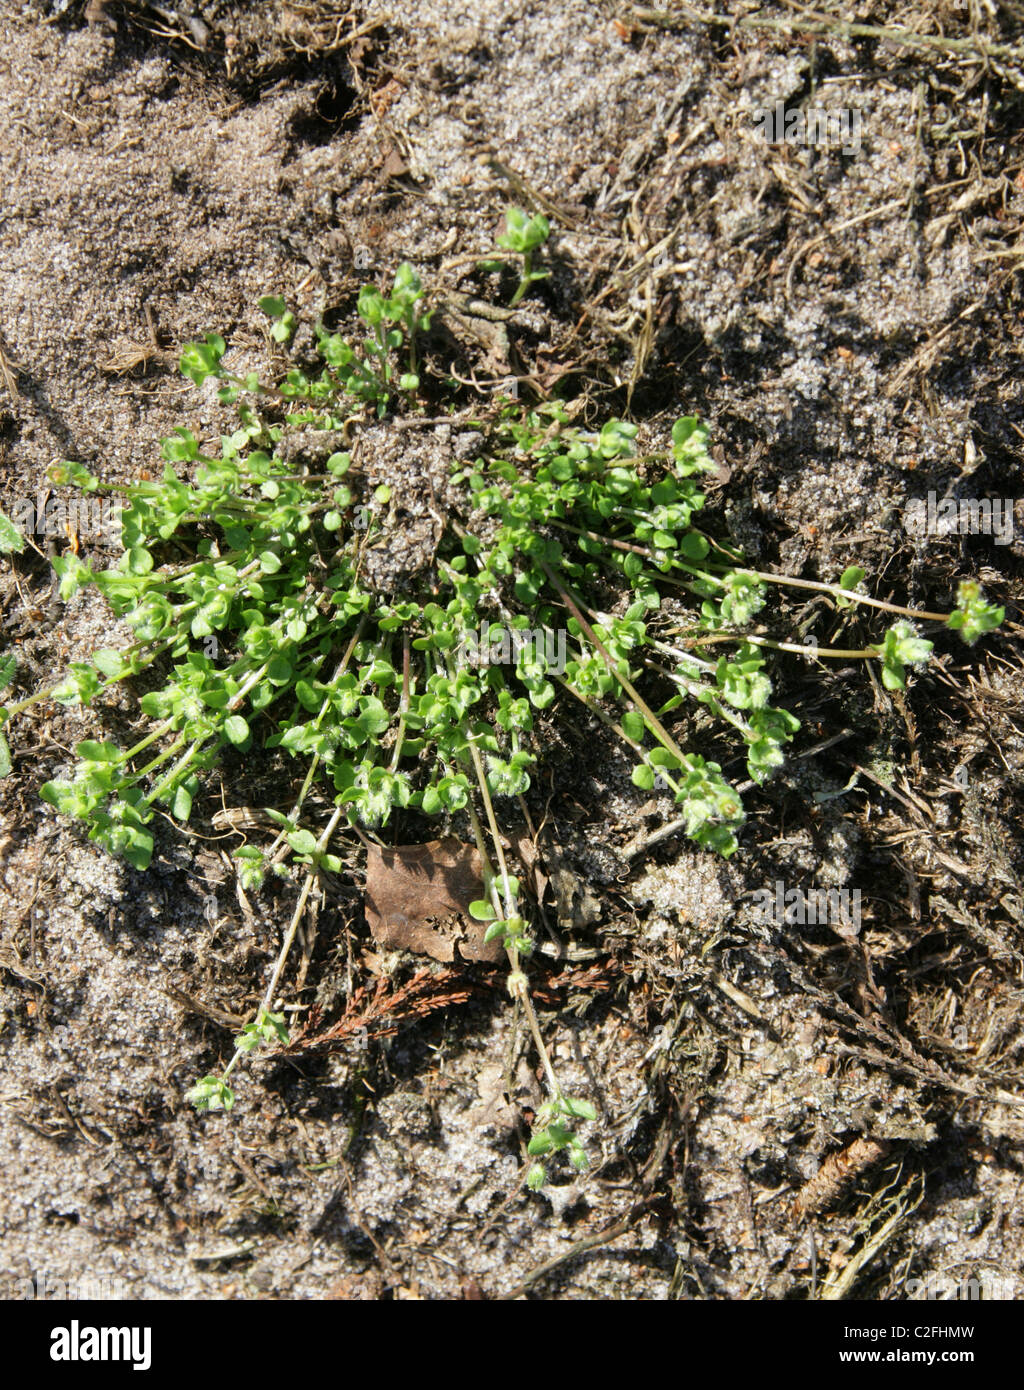 Thyme-leaved Sandwort, Arenaria serpyllifolia, Caryophyllaceae. Stock Photo